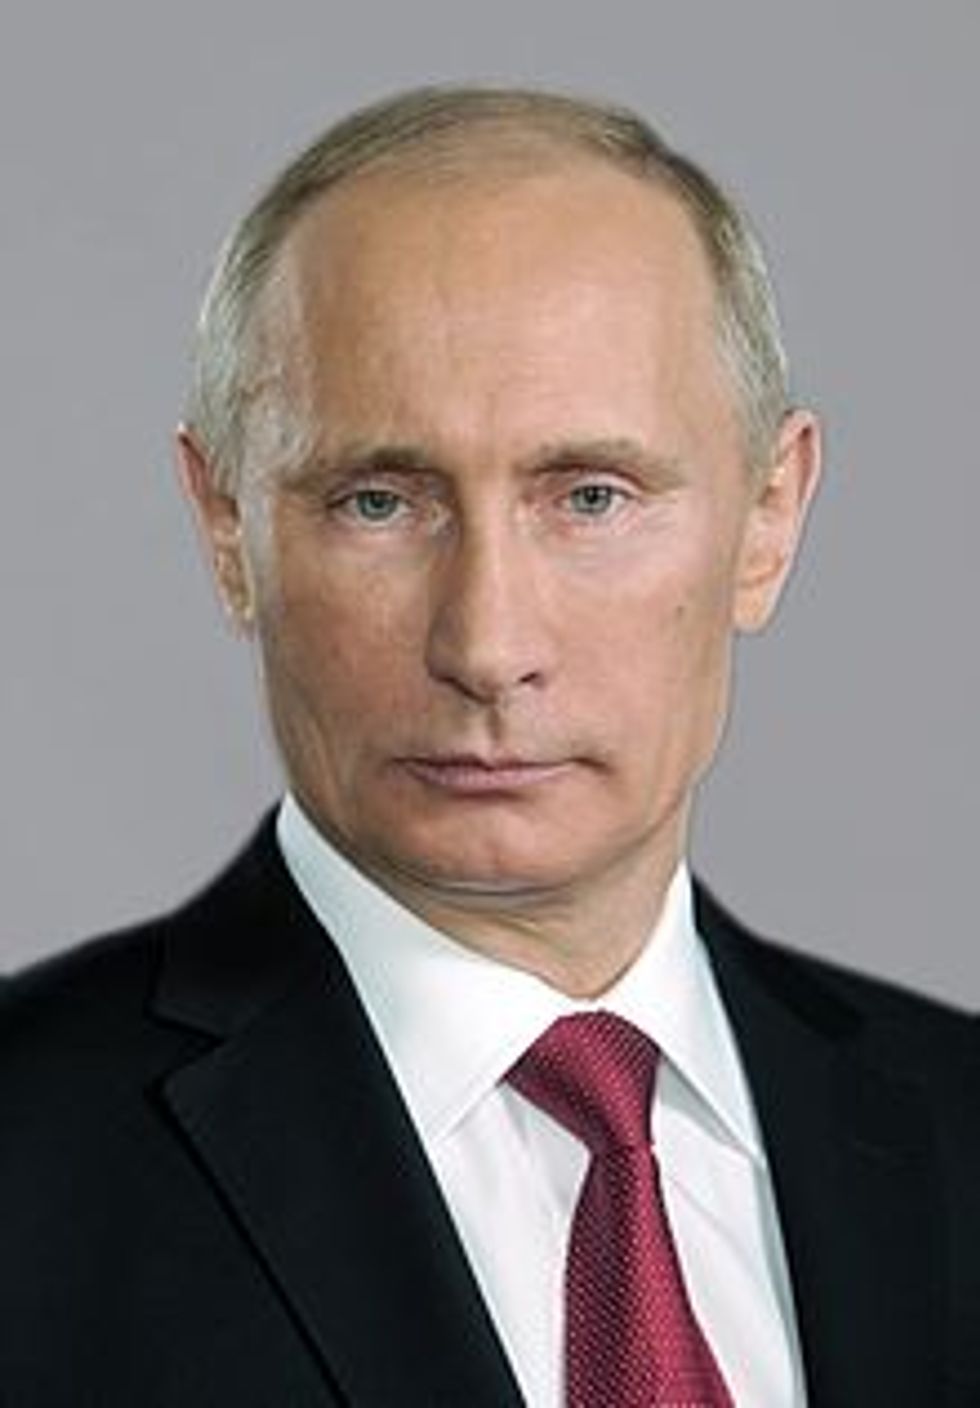 Hello! I, Vladimir Putin, Again Make The Speaking To Your Wonkette!